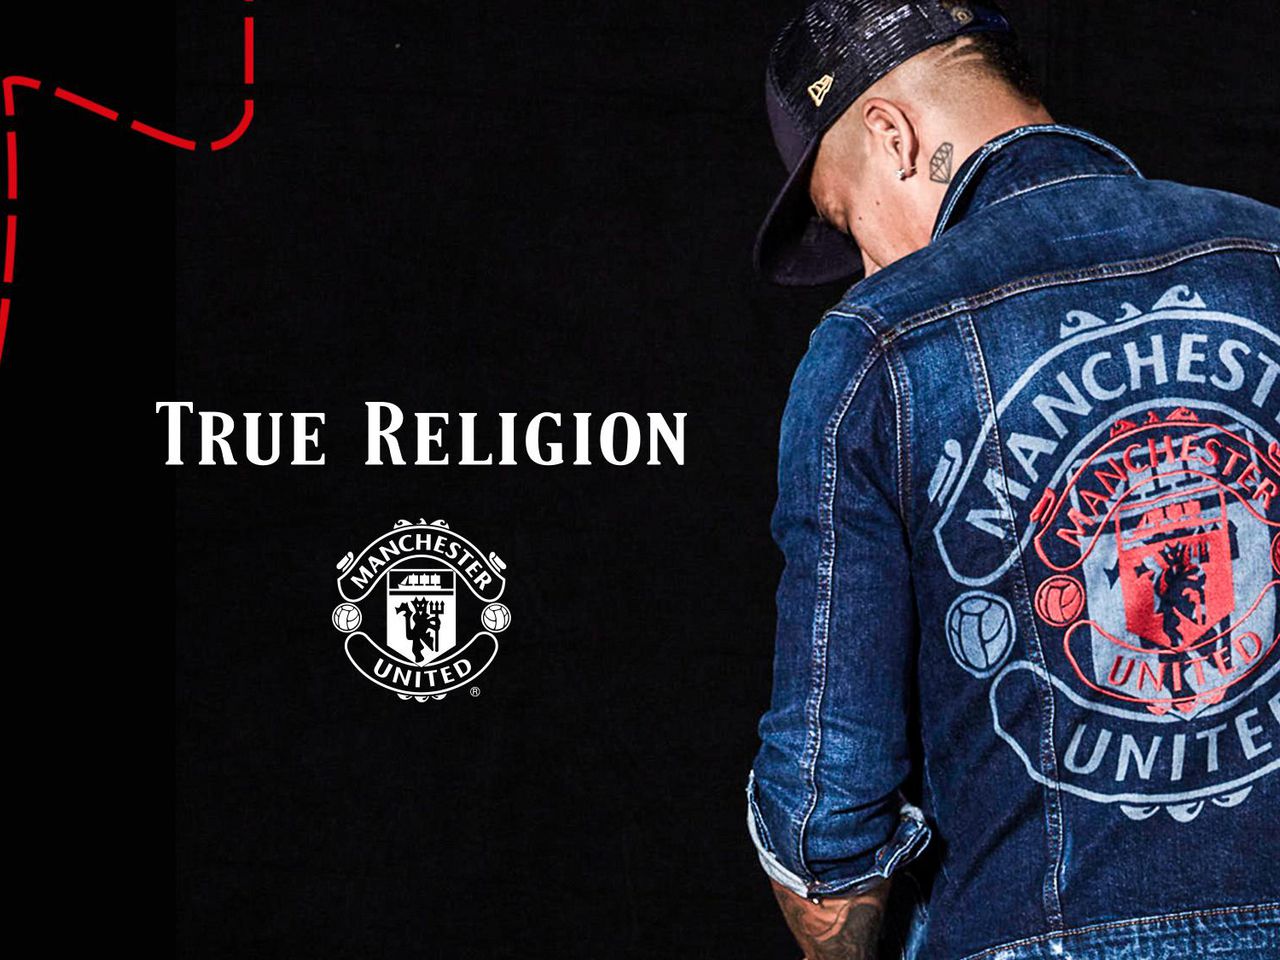 True Religion launch new denim range 